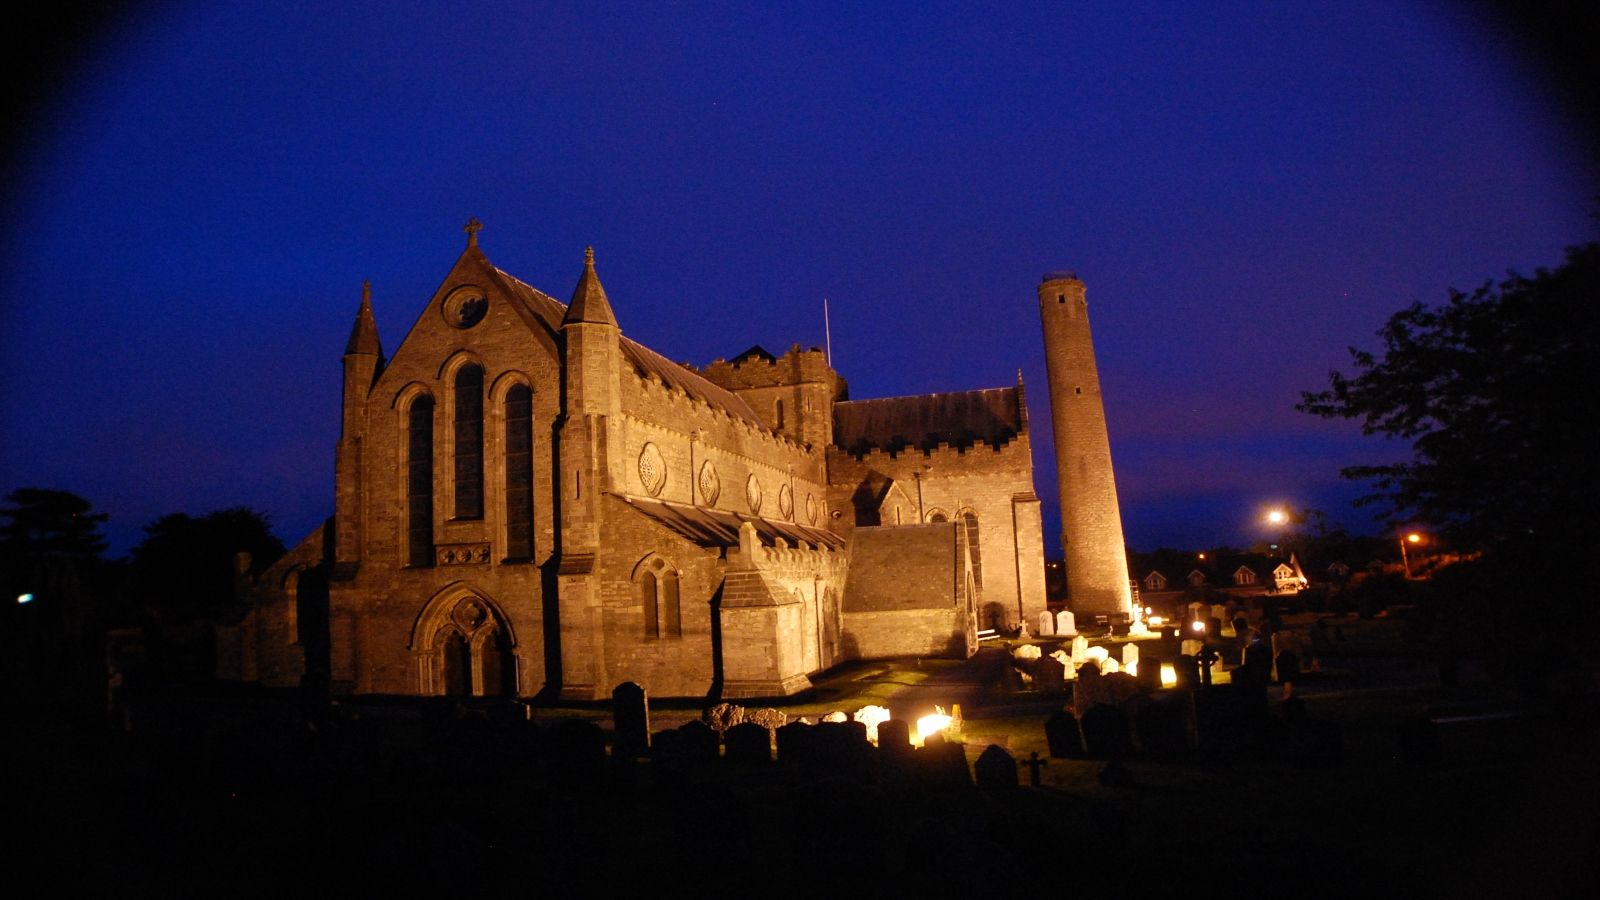 Cathedral at night_master 1 - Copy